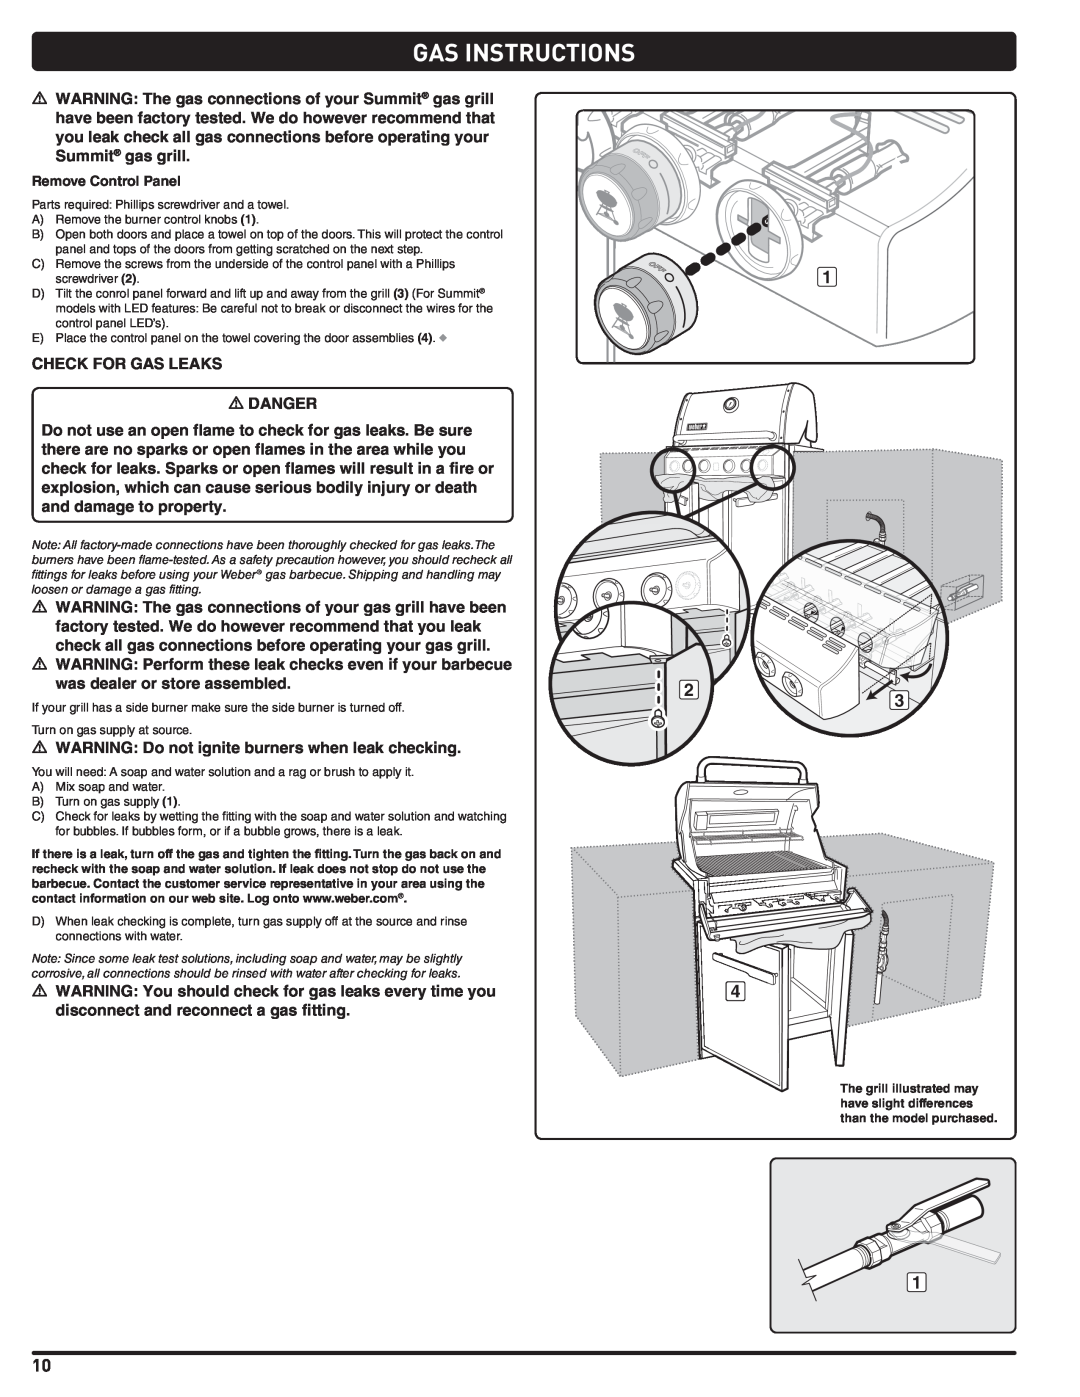 Weber 56576 manual Gas Instructions, CHECK FOR GAS LEAKS m DANGER 